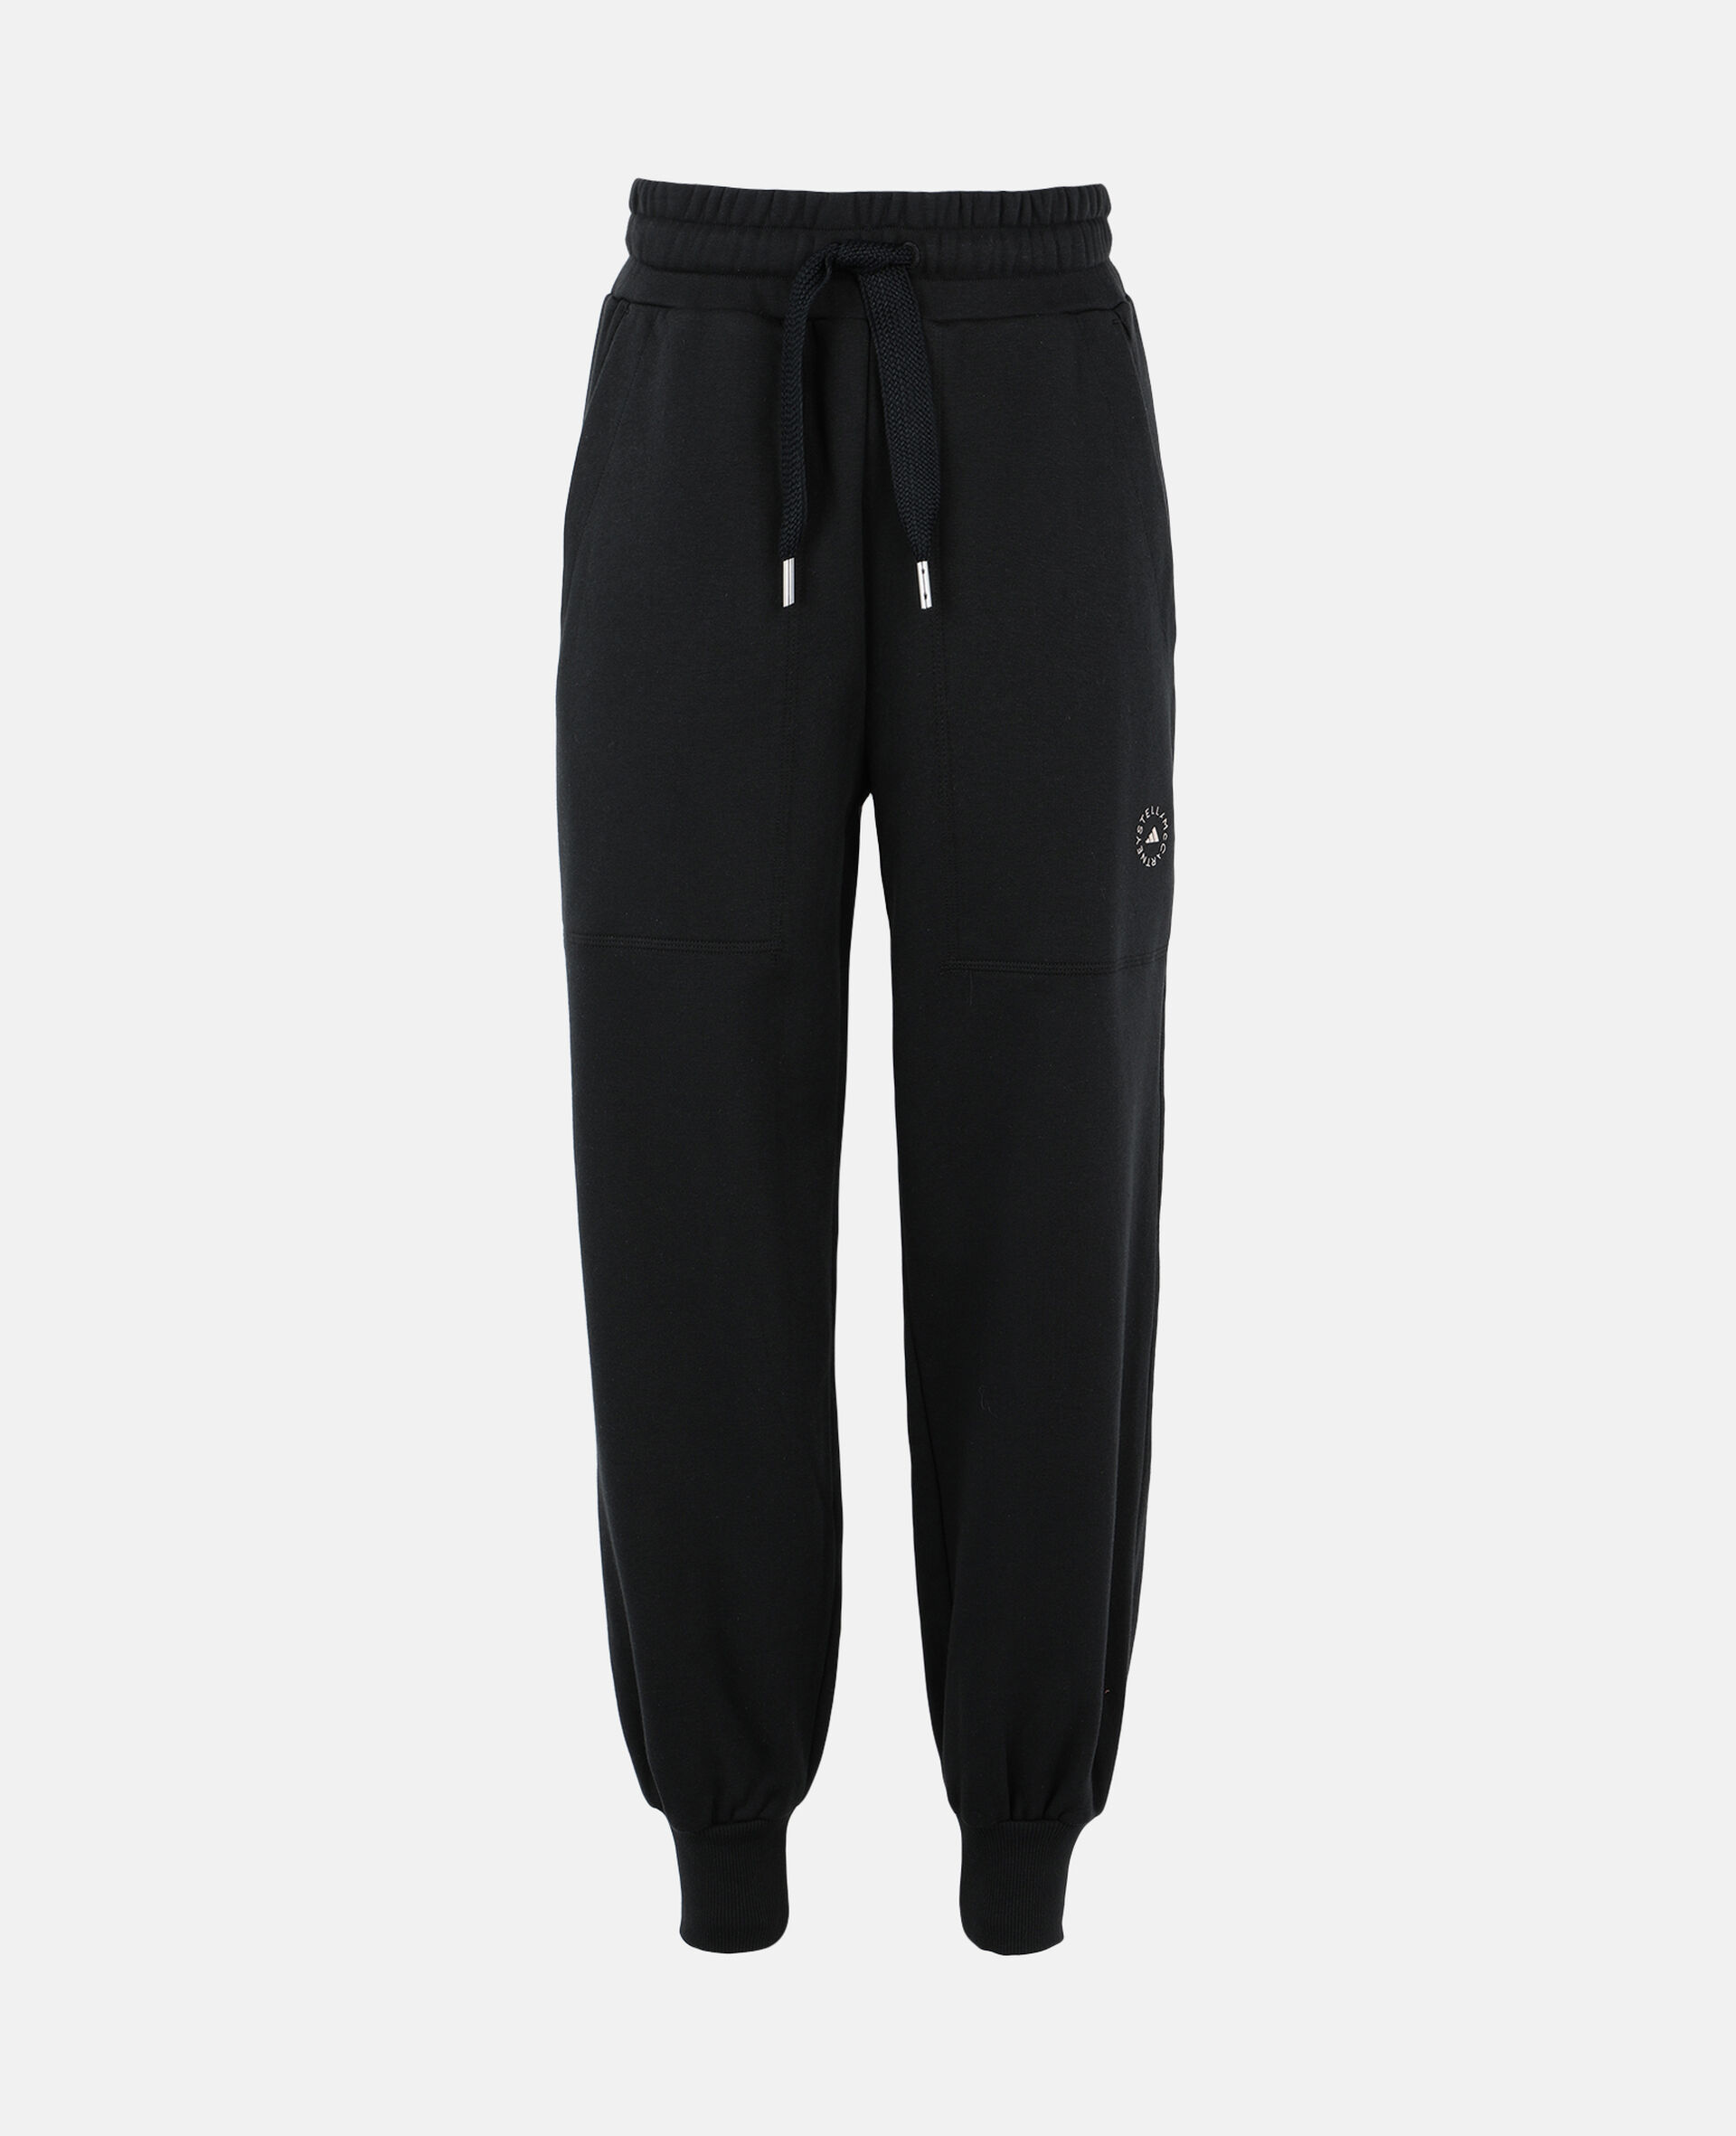 Gray Training Sweatpants-Black-large image number 0